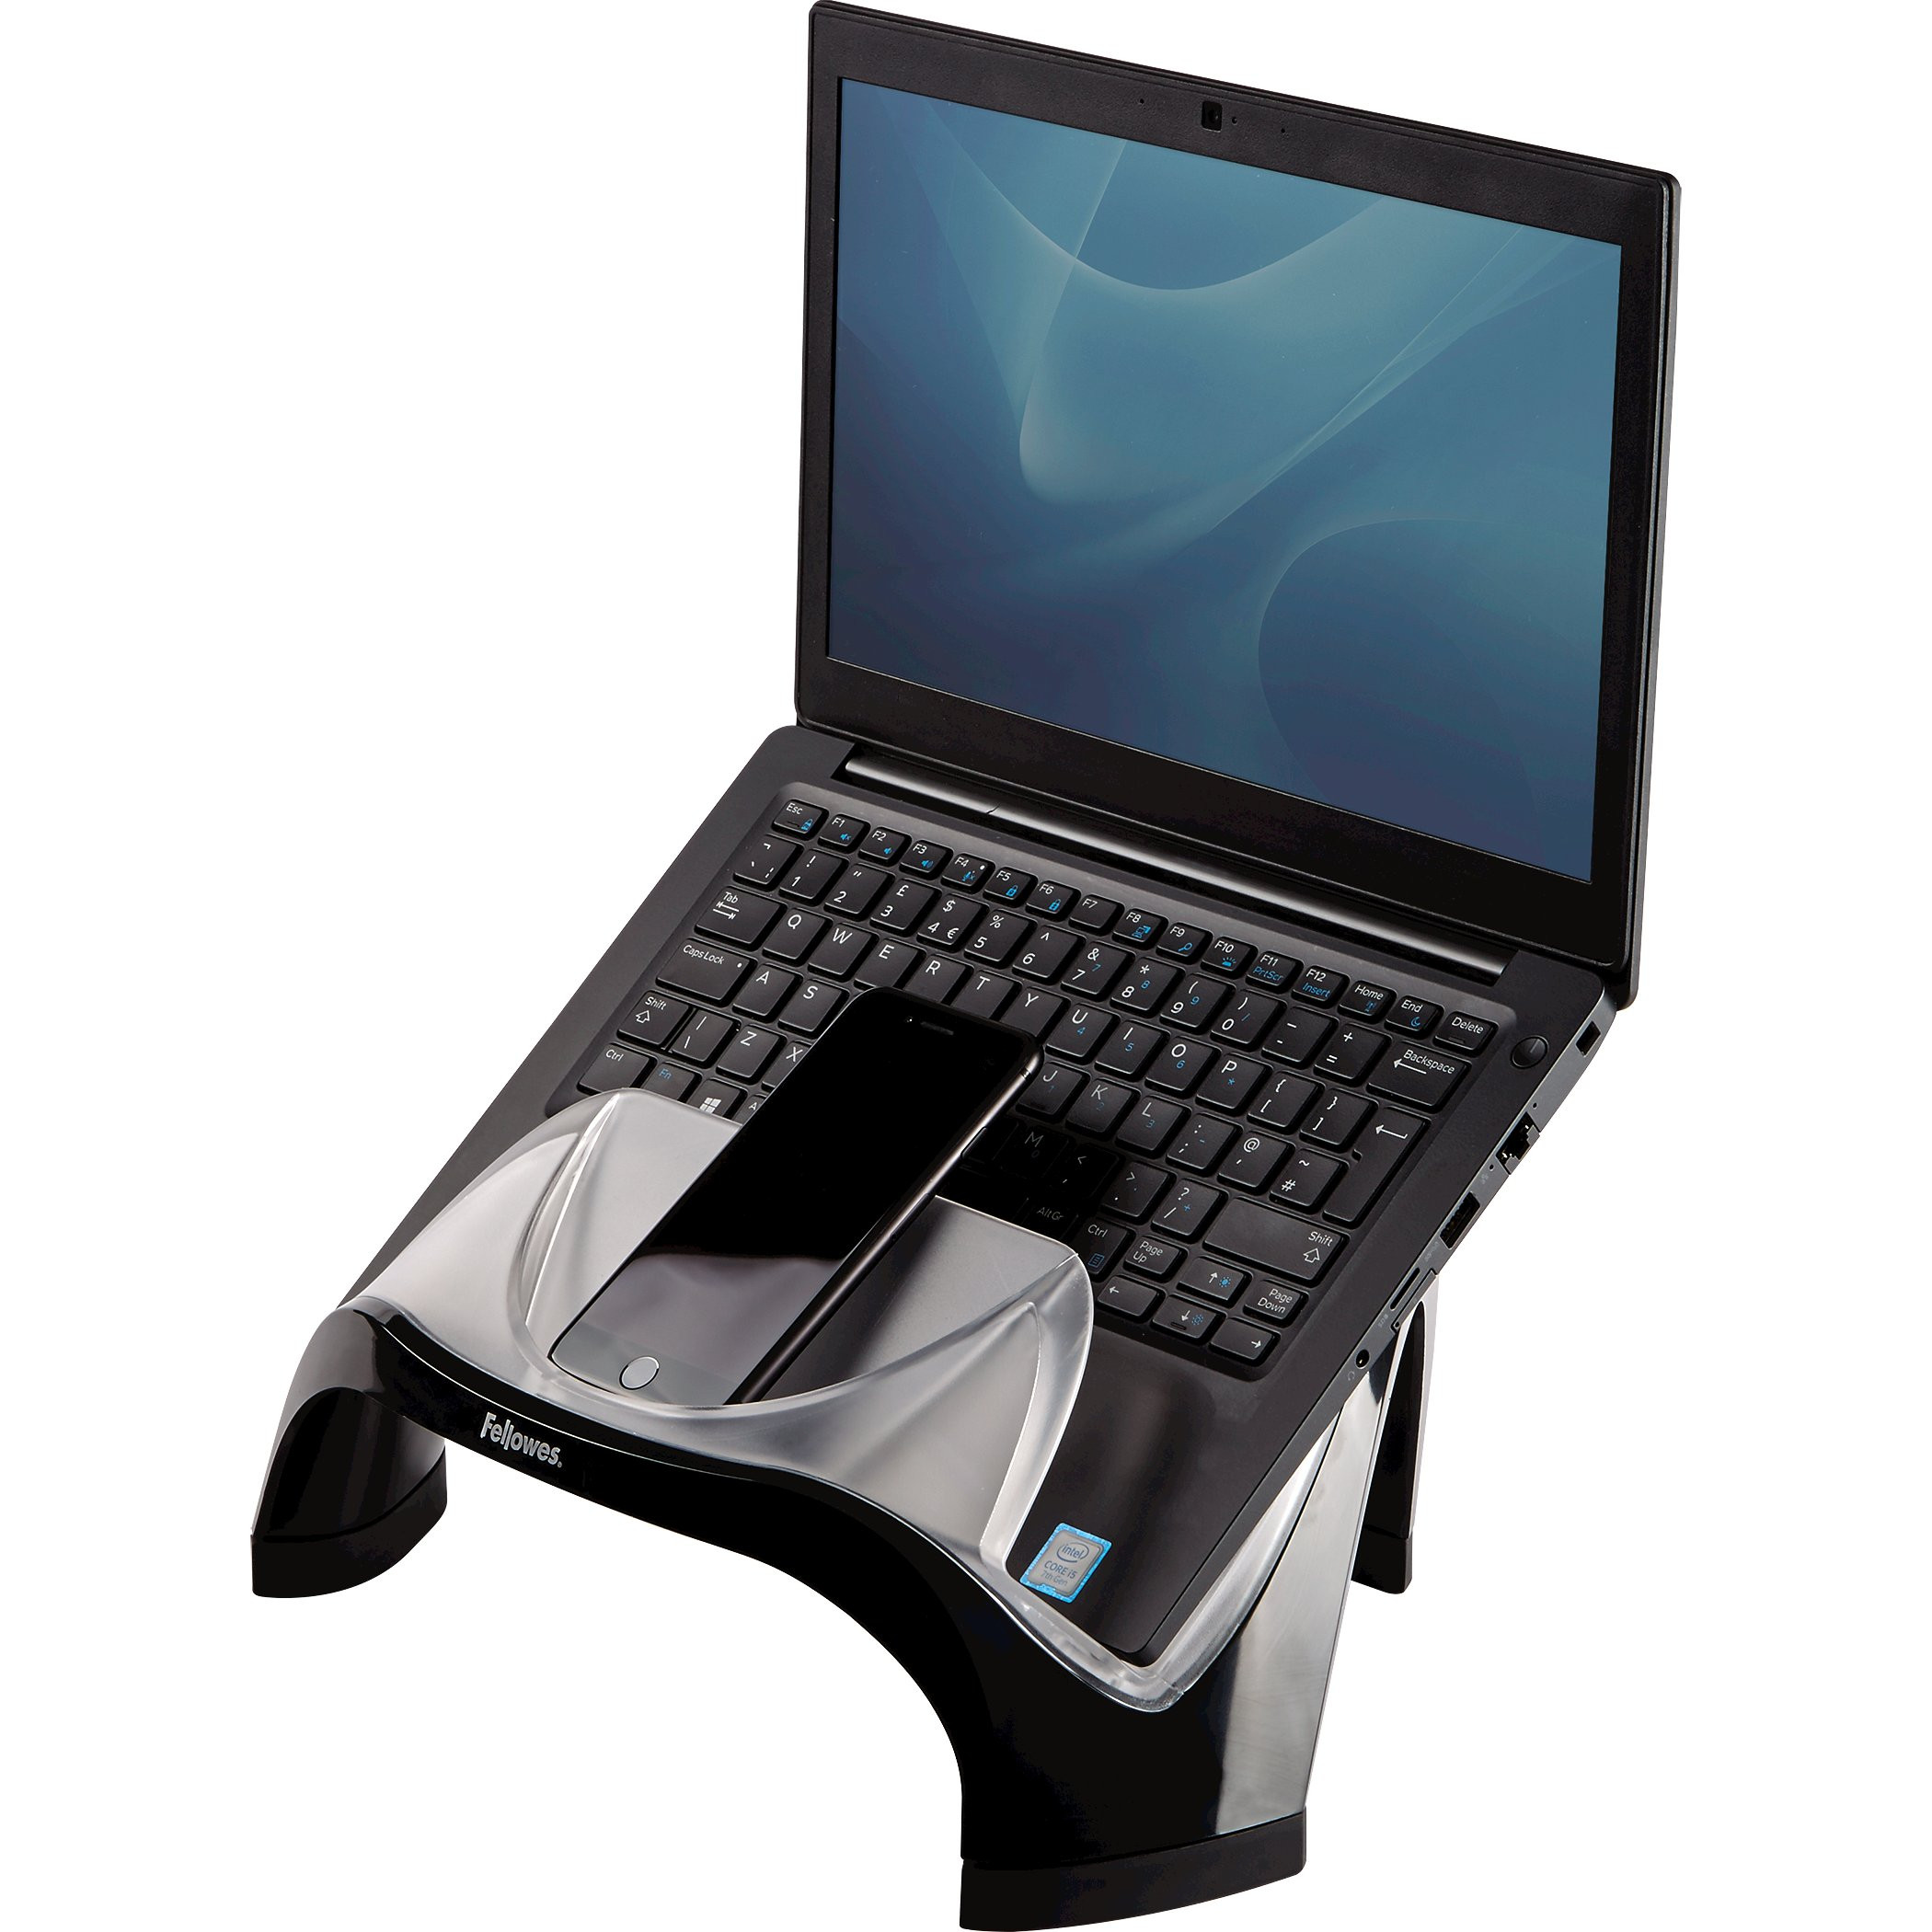 Support pour ordinateur portable - BuroStock Guadeloupe